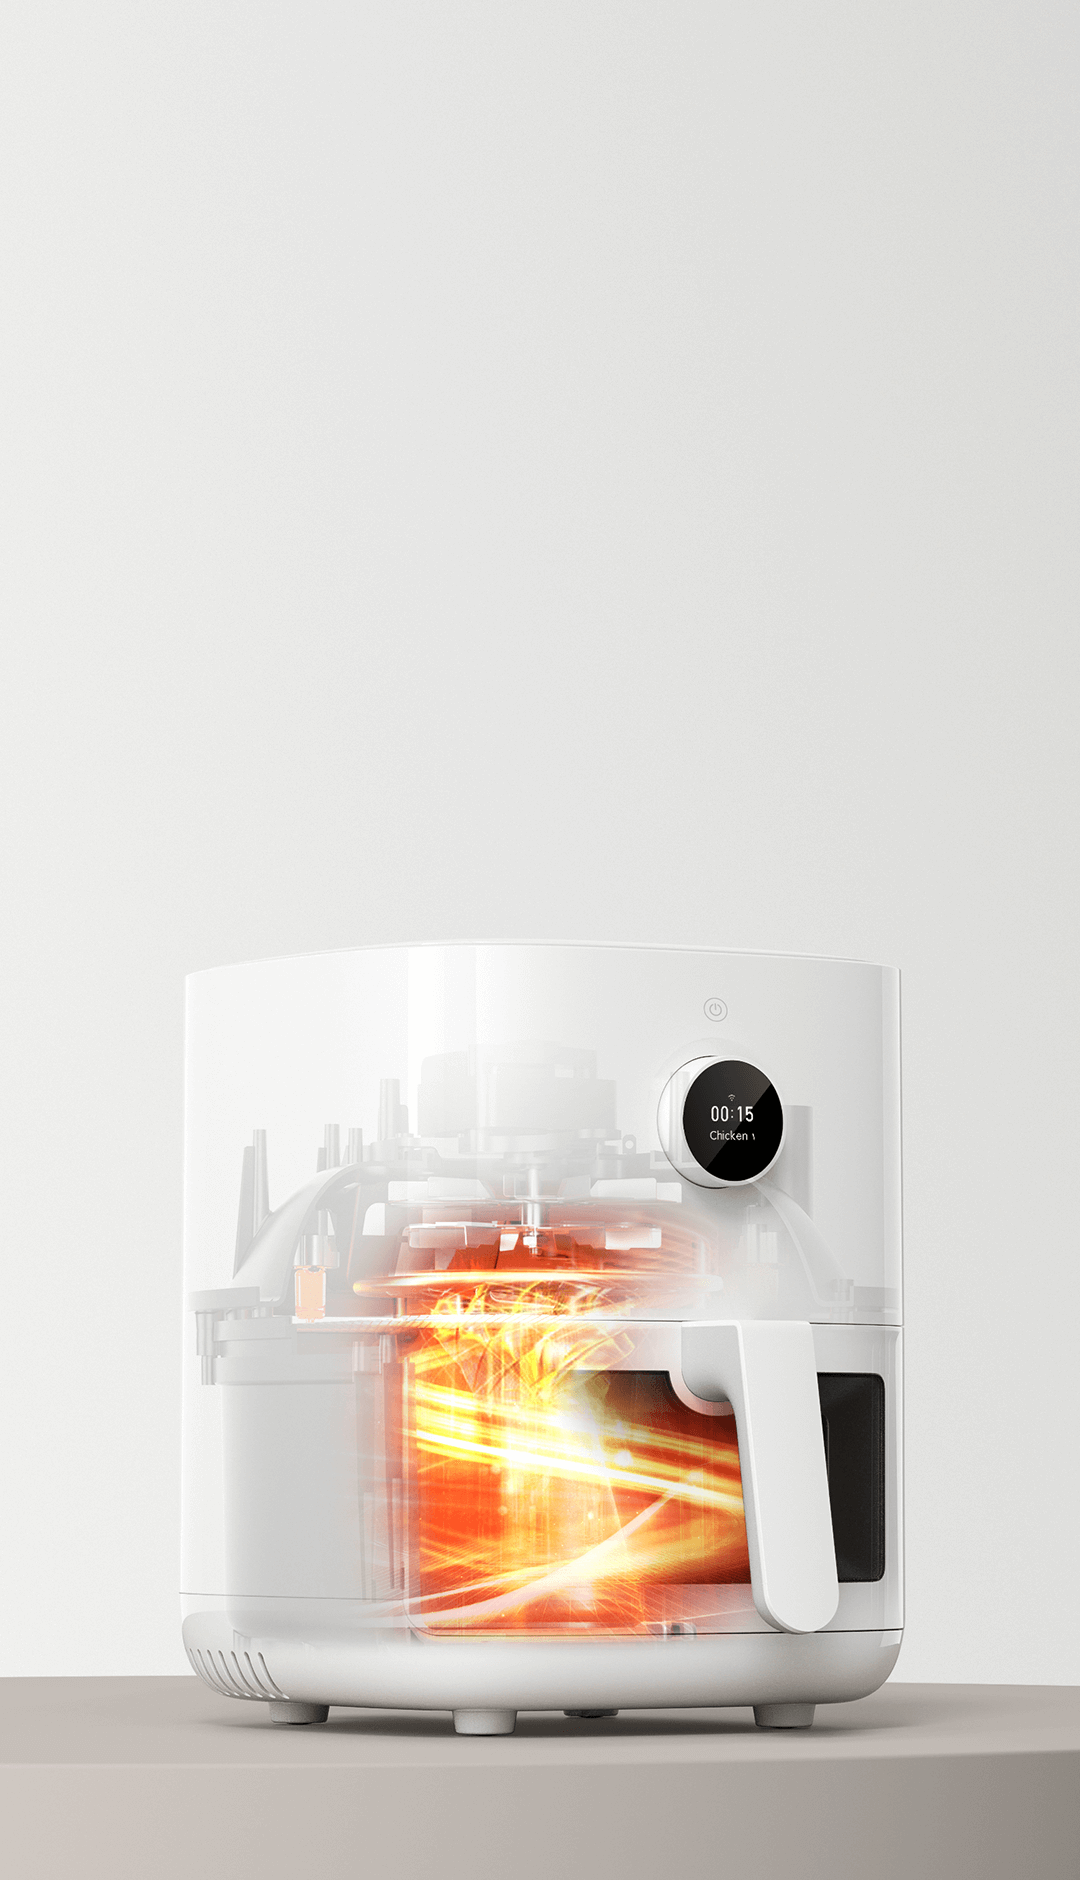 Xiaomi Mi Smart Air Fryer 3.5L White CE